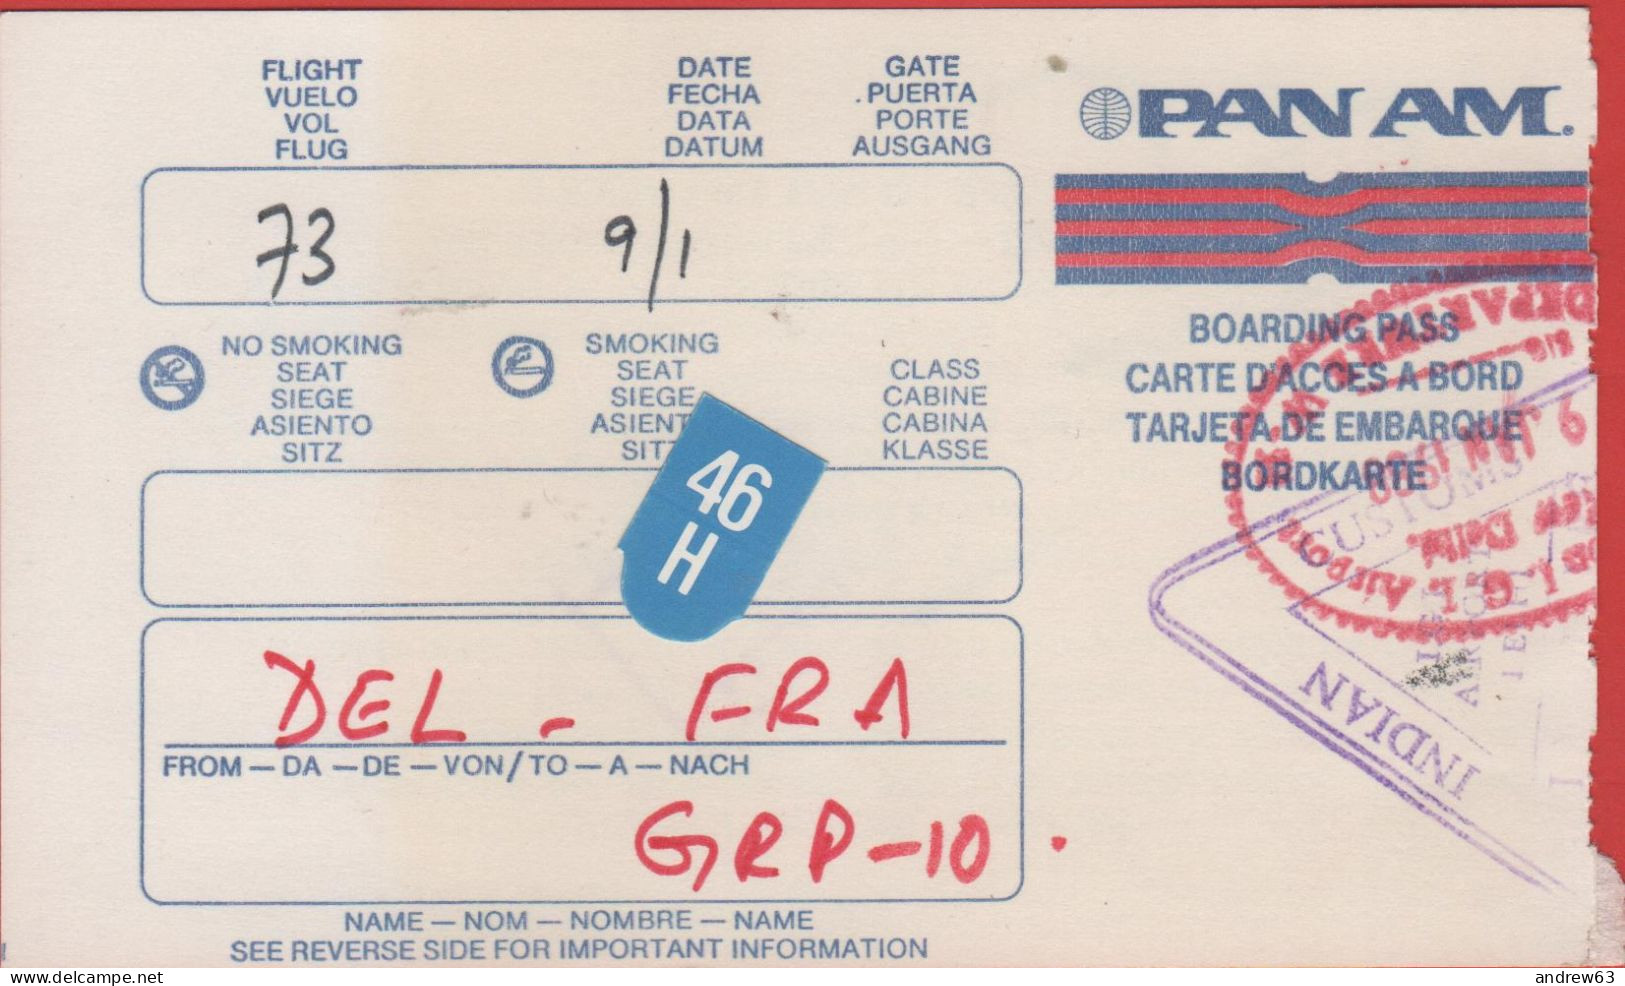 USA - PAN AM - DEL-FRA - Carta D'Imbarco - Boarding Pass - Monde